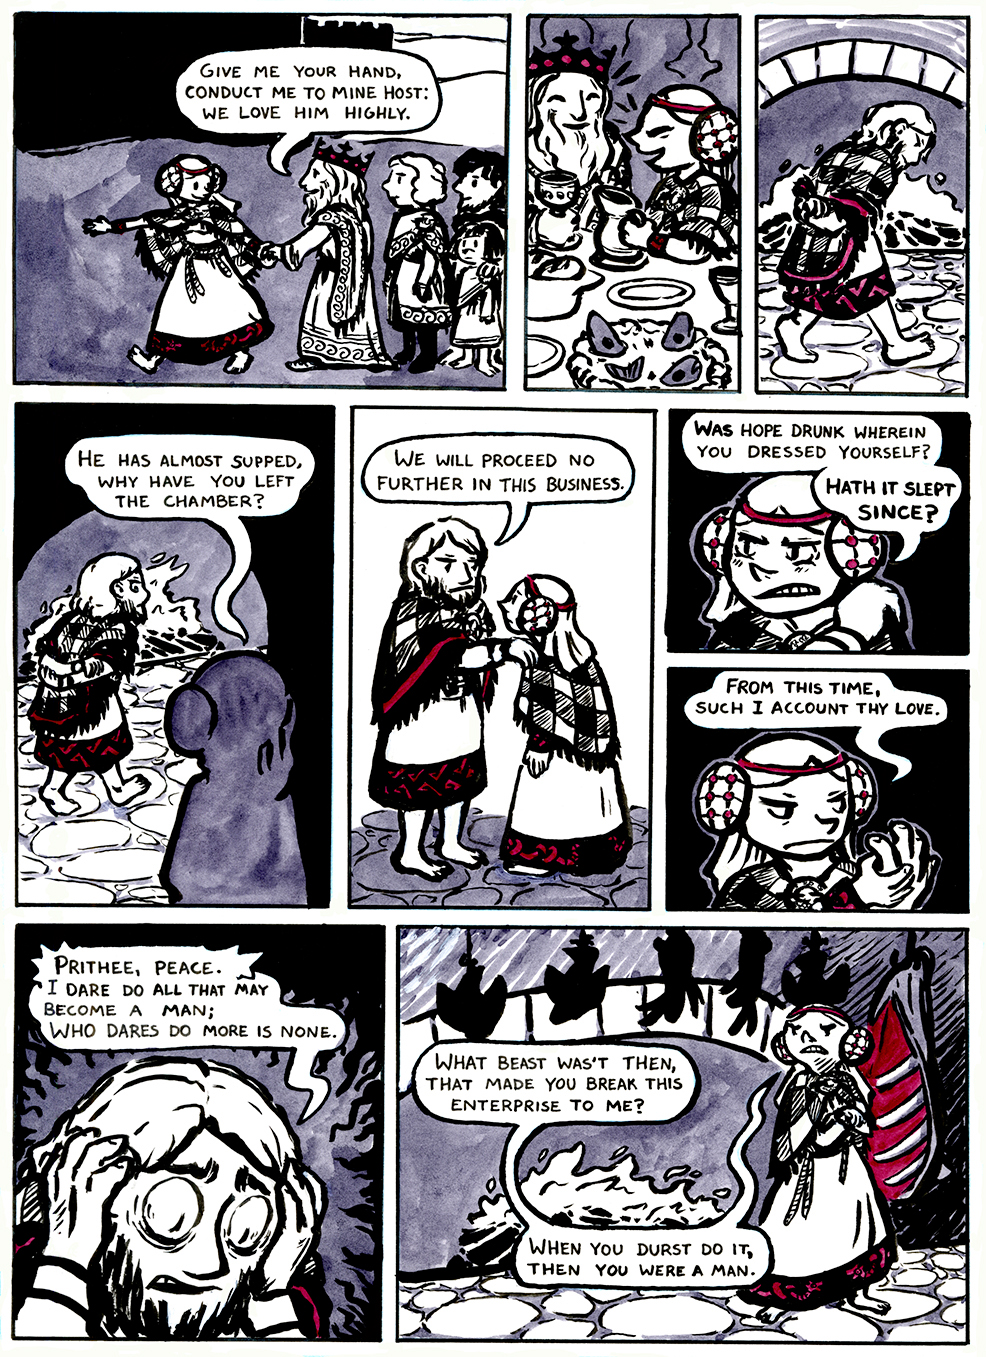 Macbeth shakespeare literature adaption comic